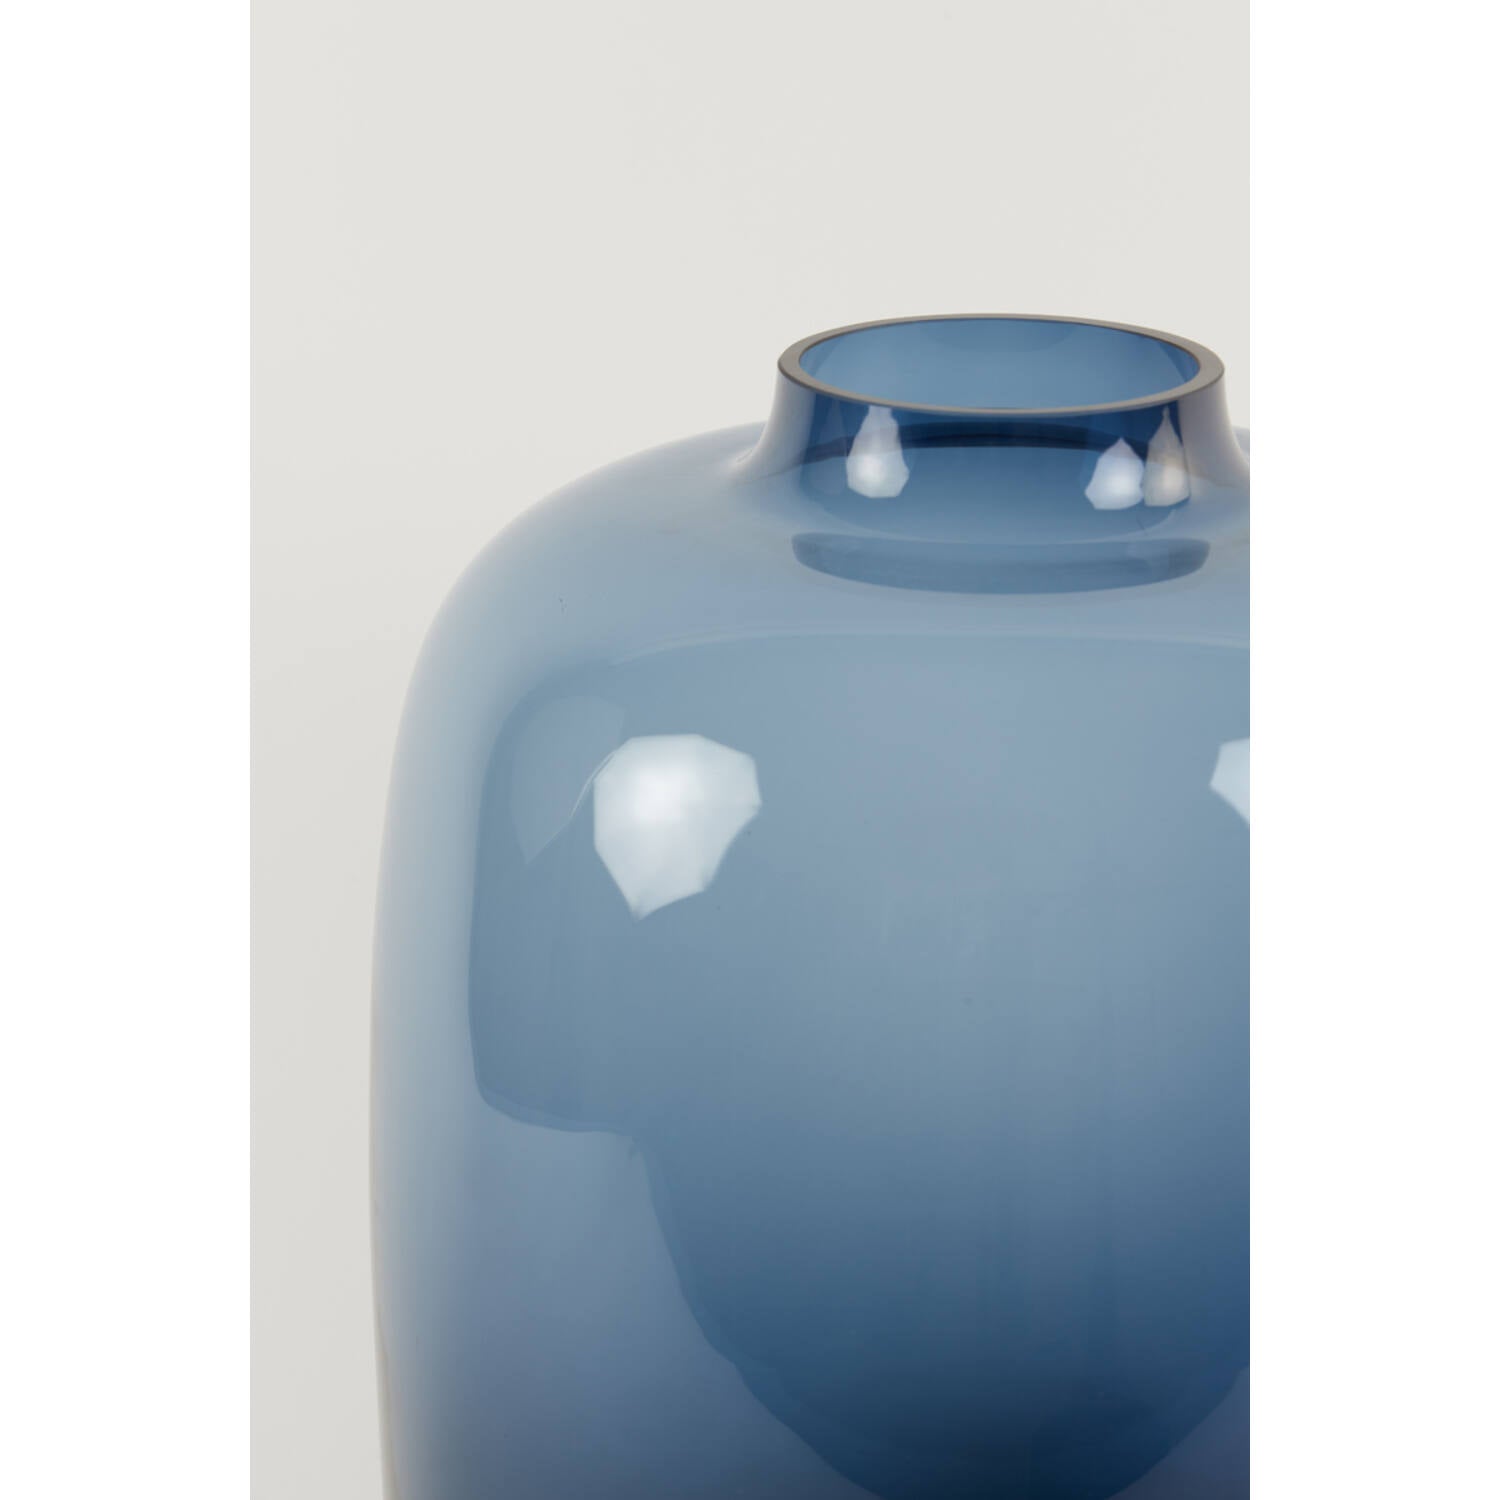 Keira Medium Vase - Navy Blue Glass Finish